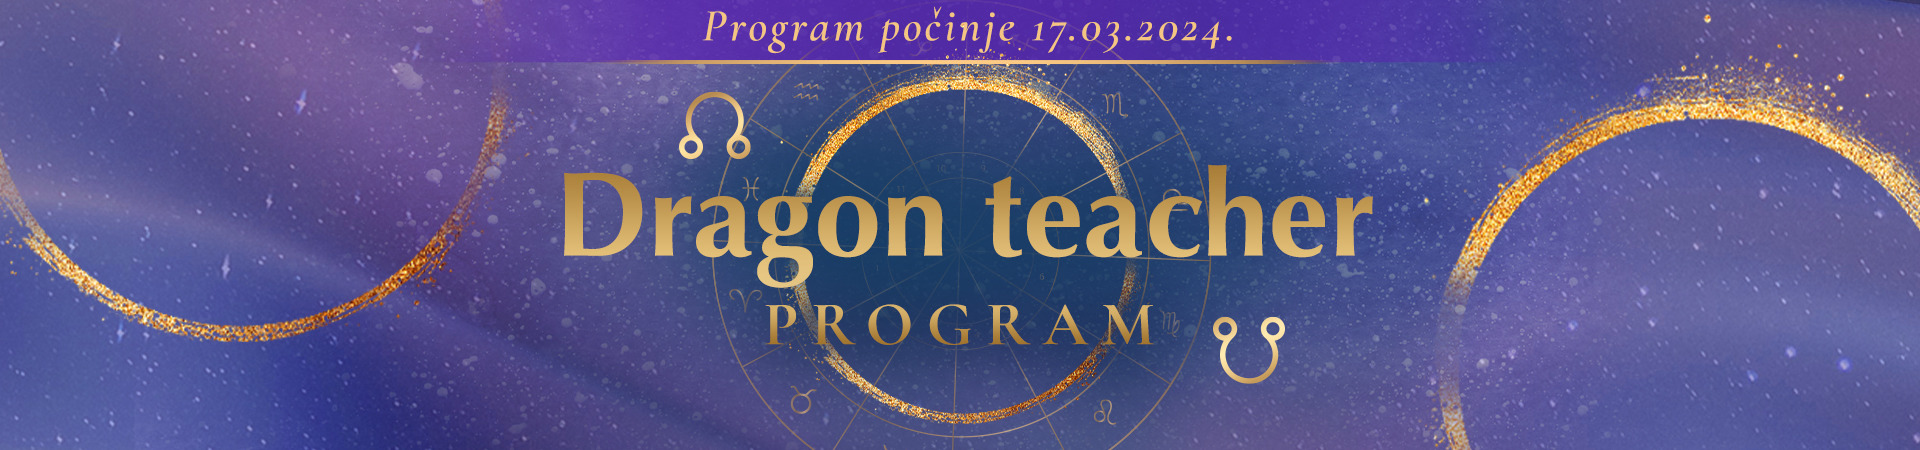 Dragon teacher